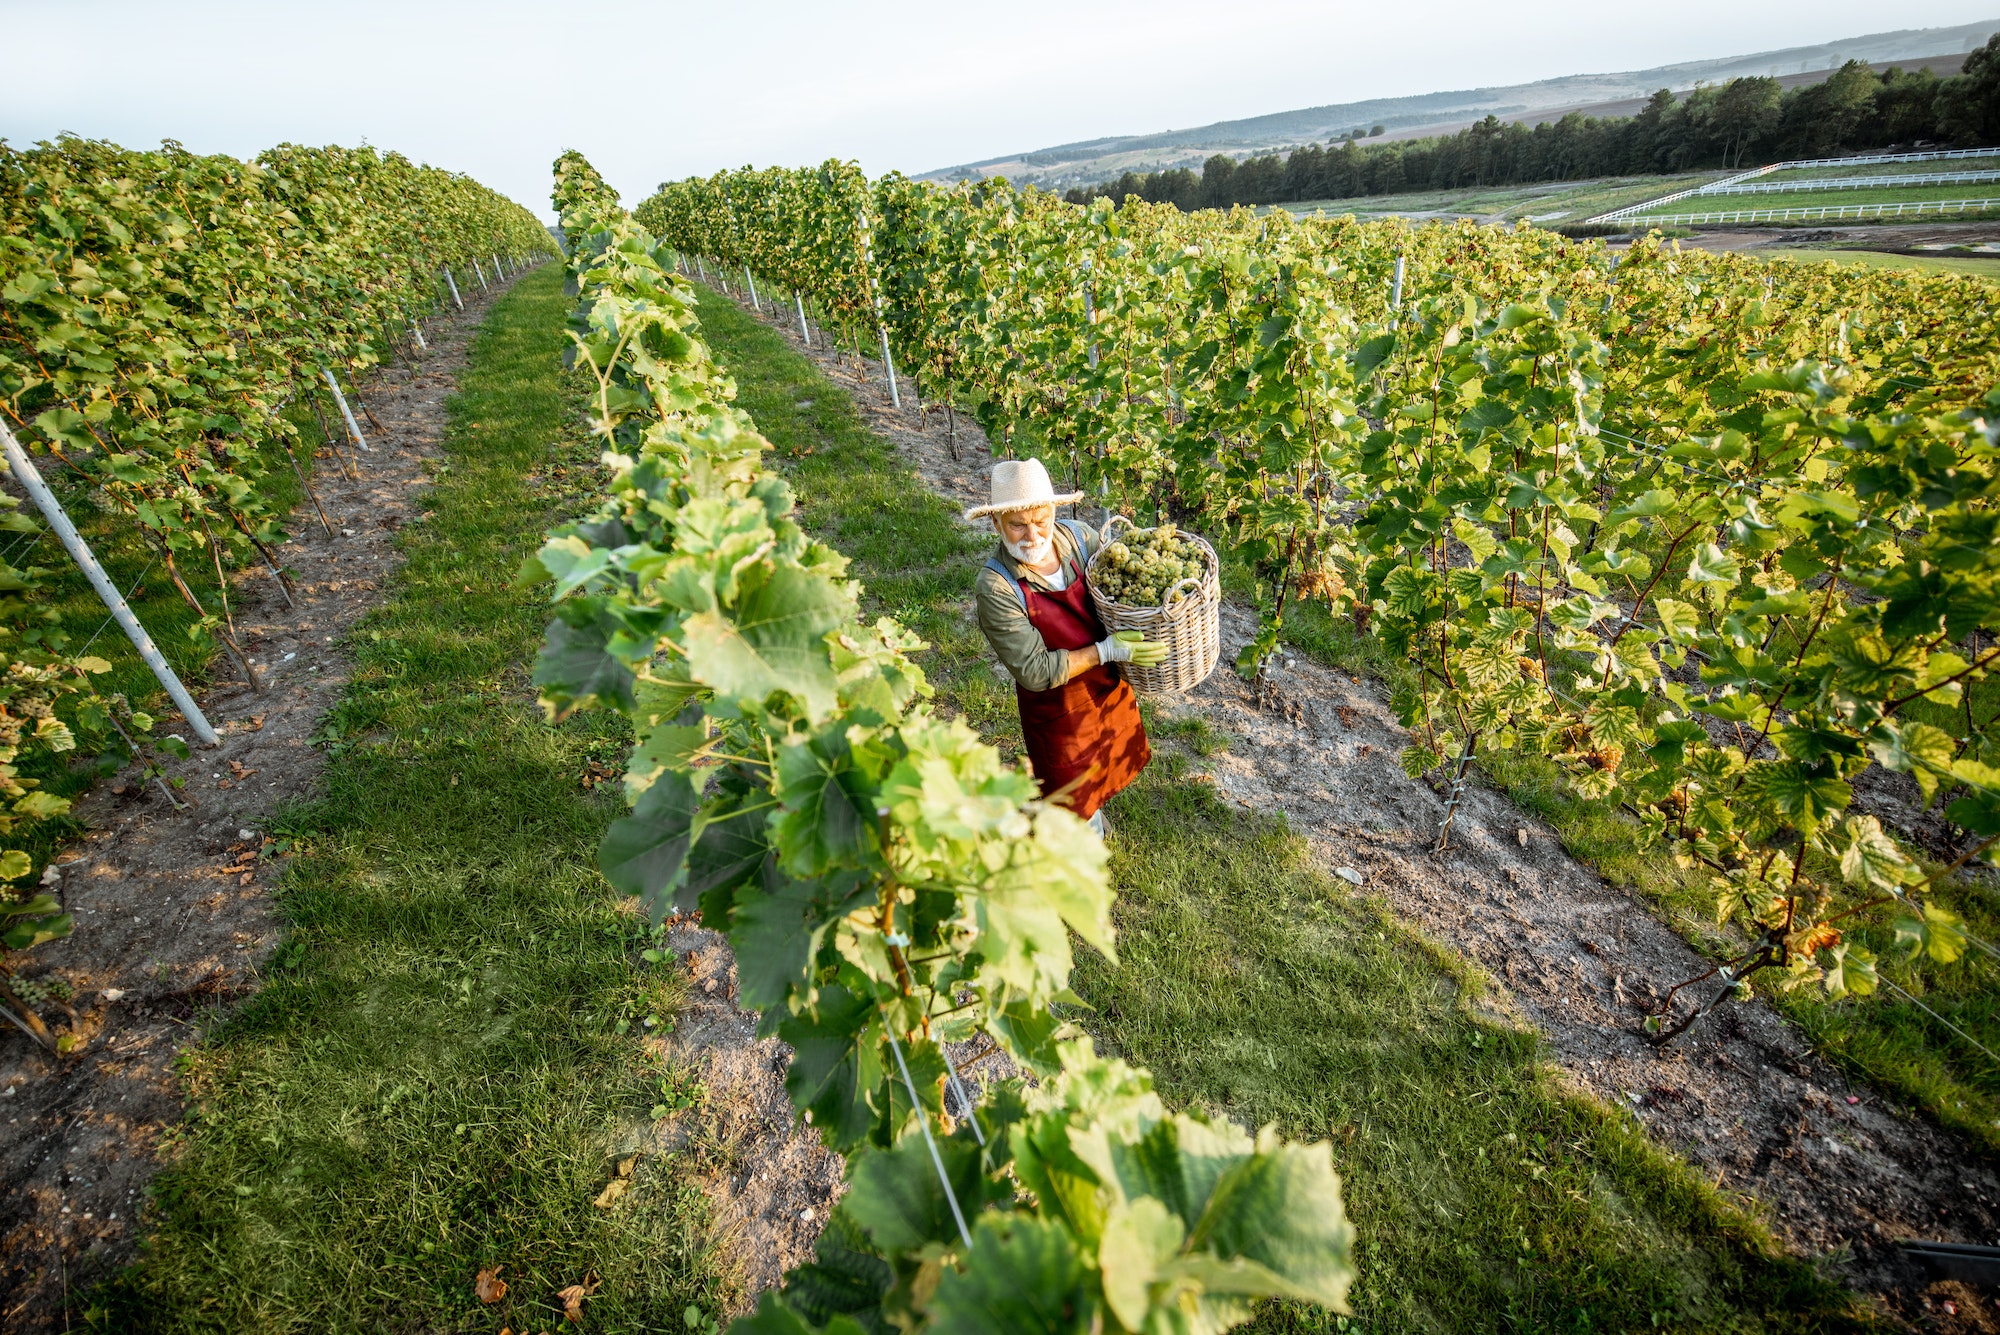 Vineyard with man harvesting grapes